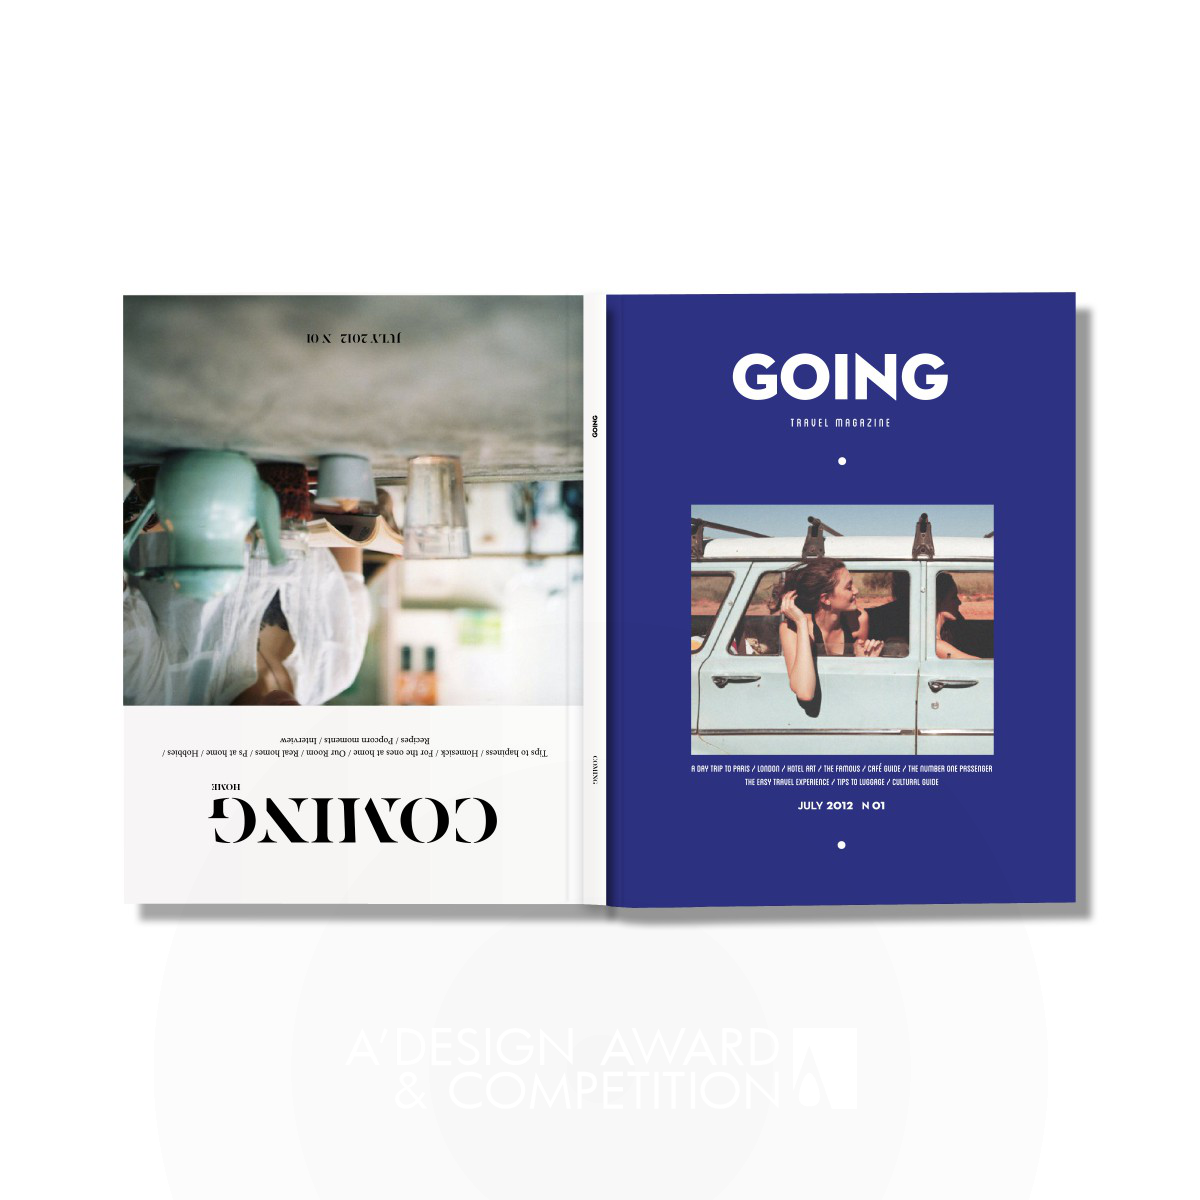 Going/Coming Magazine by Catarina Jordão